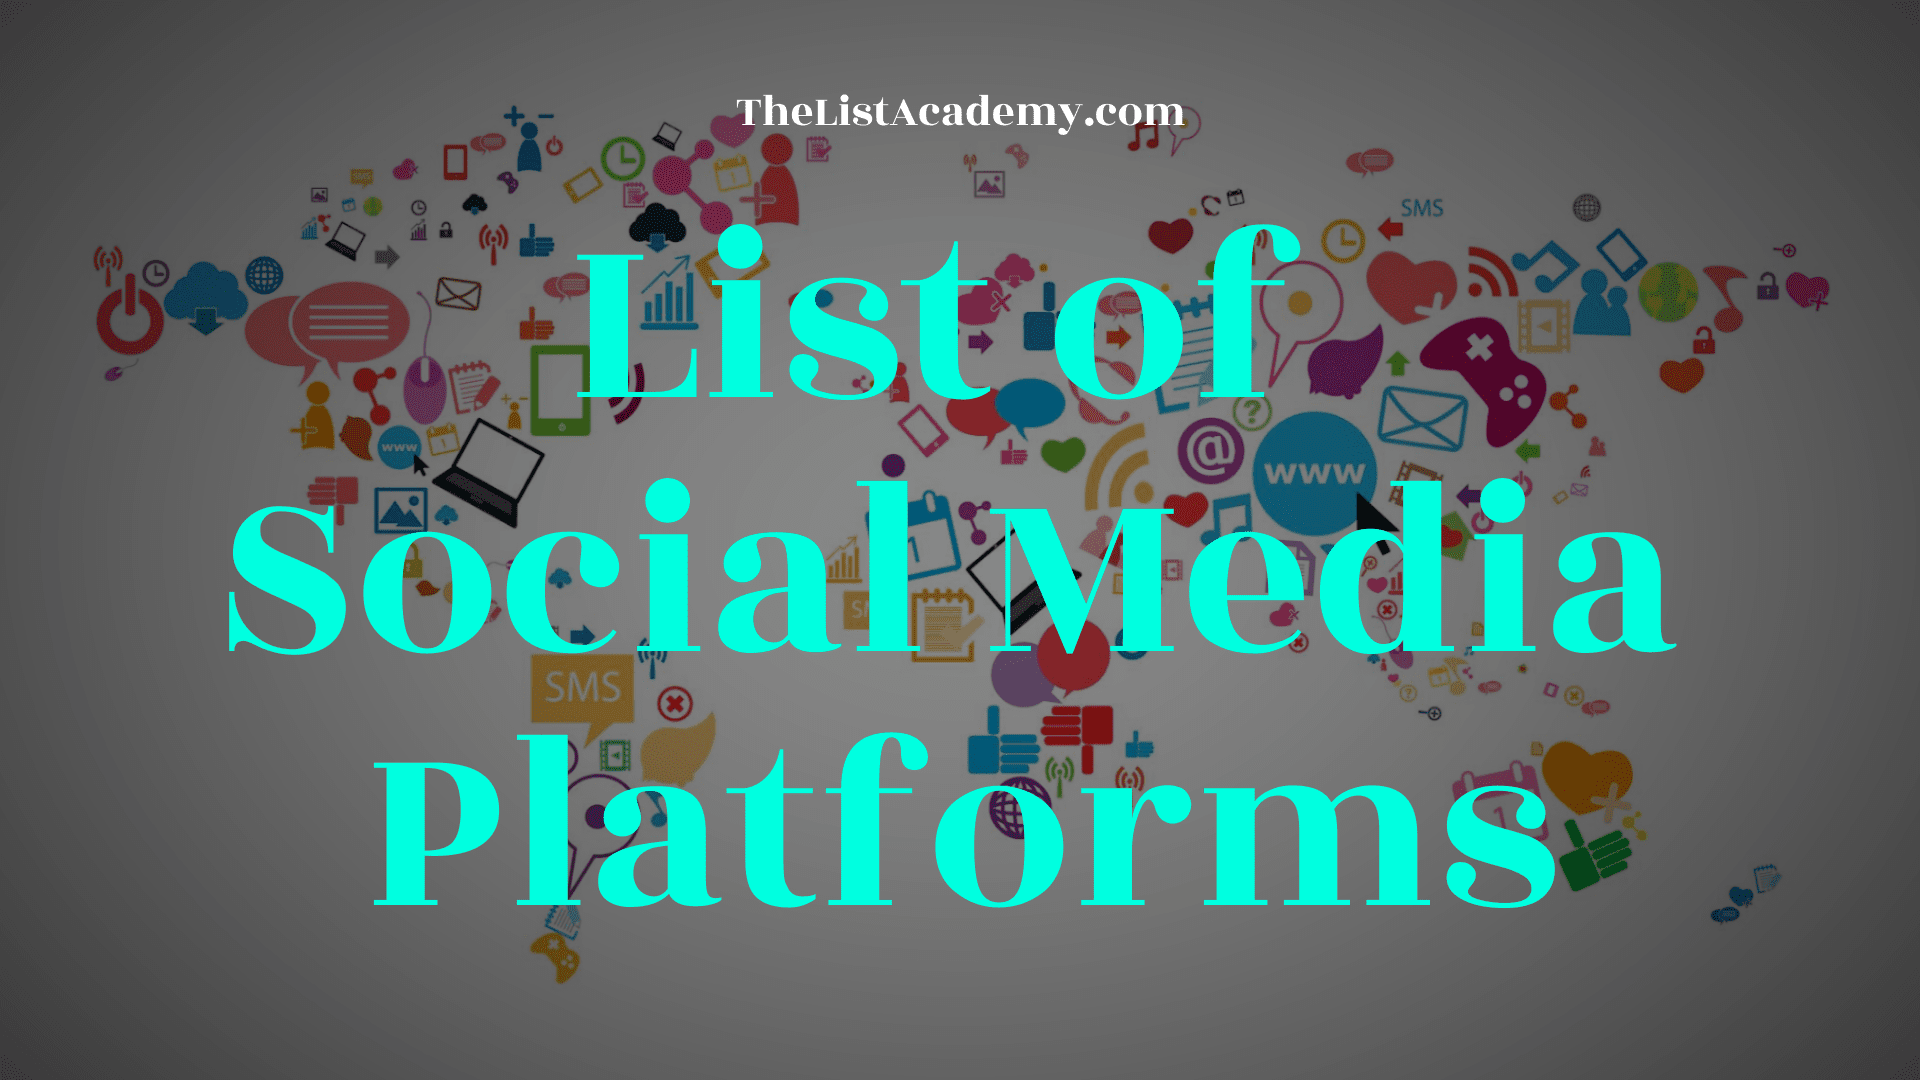 Cover Image For List : List Of  129 Social Media Platforms